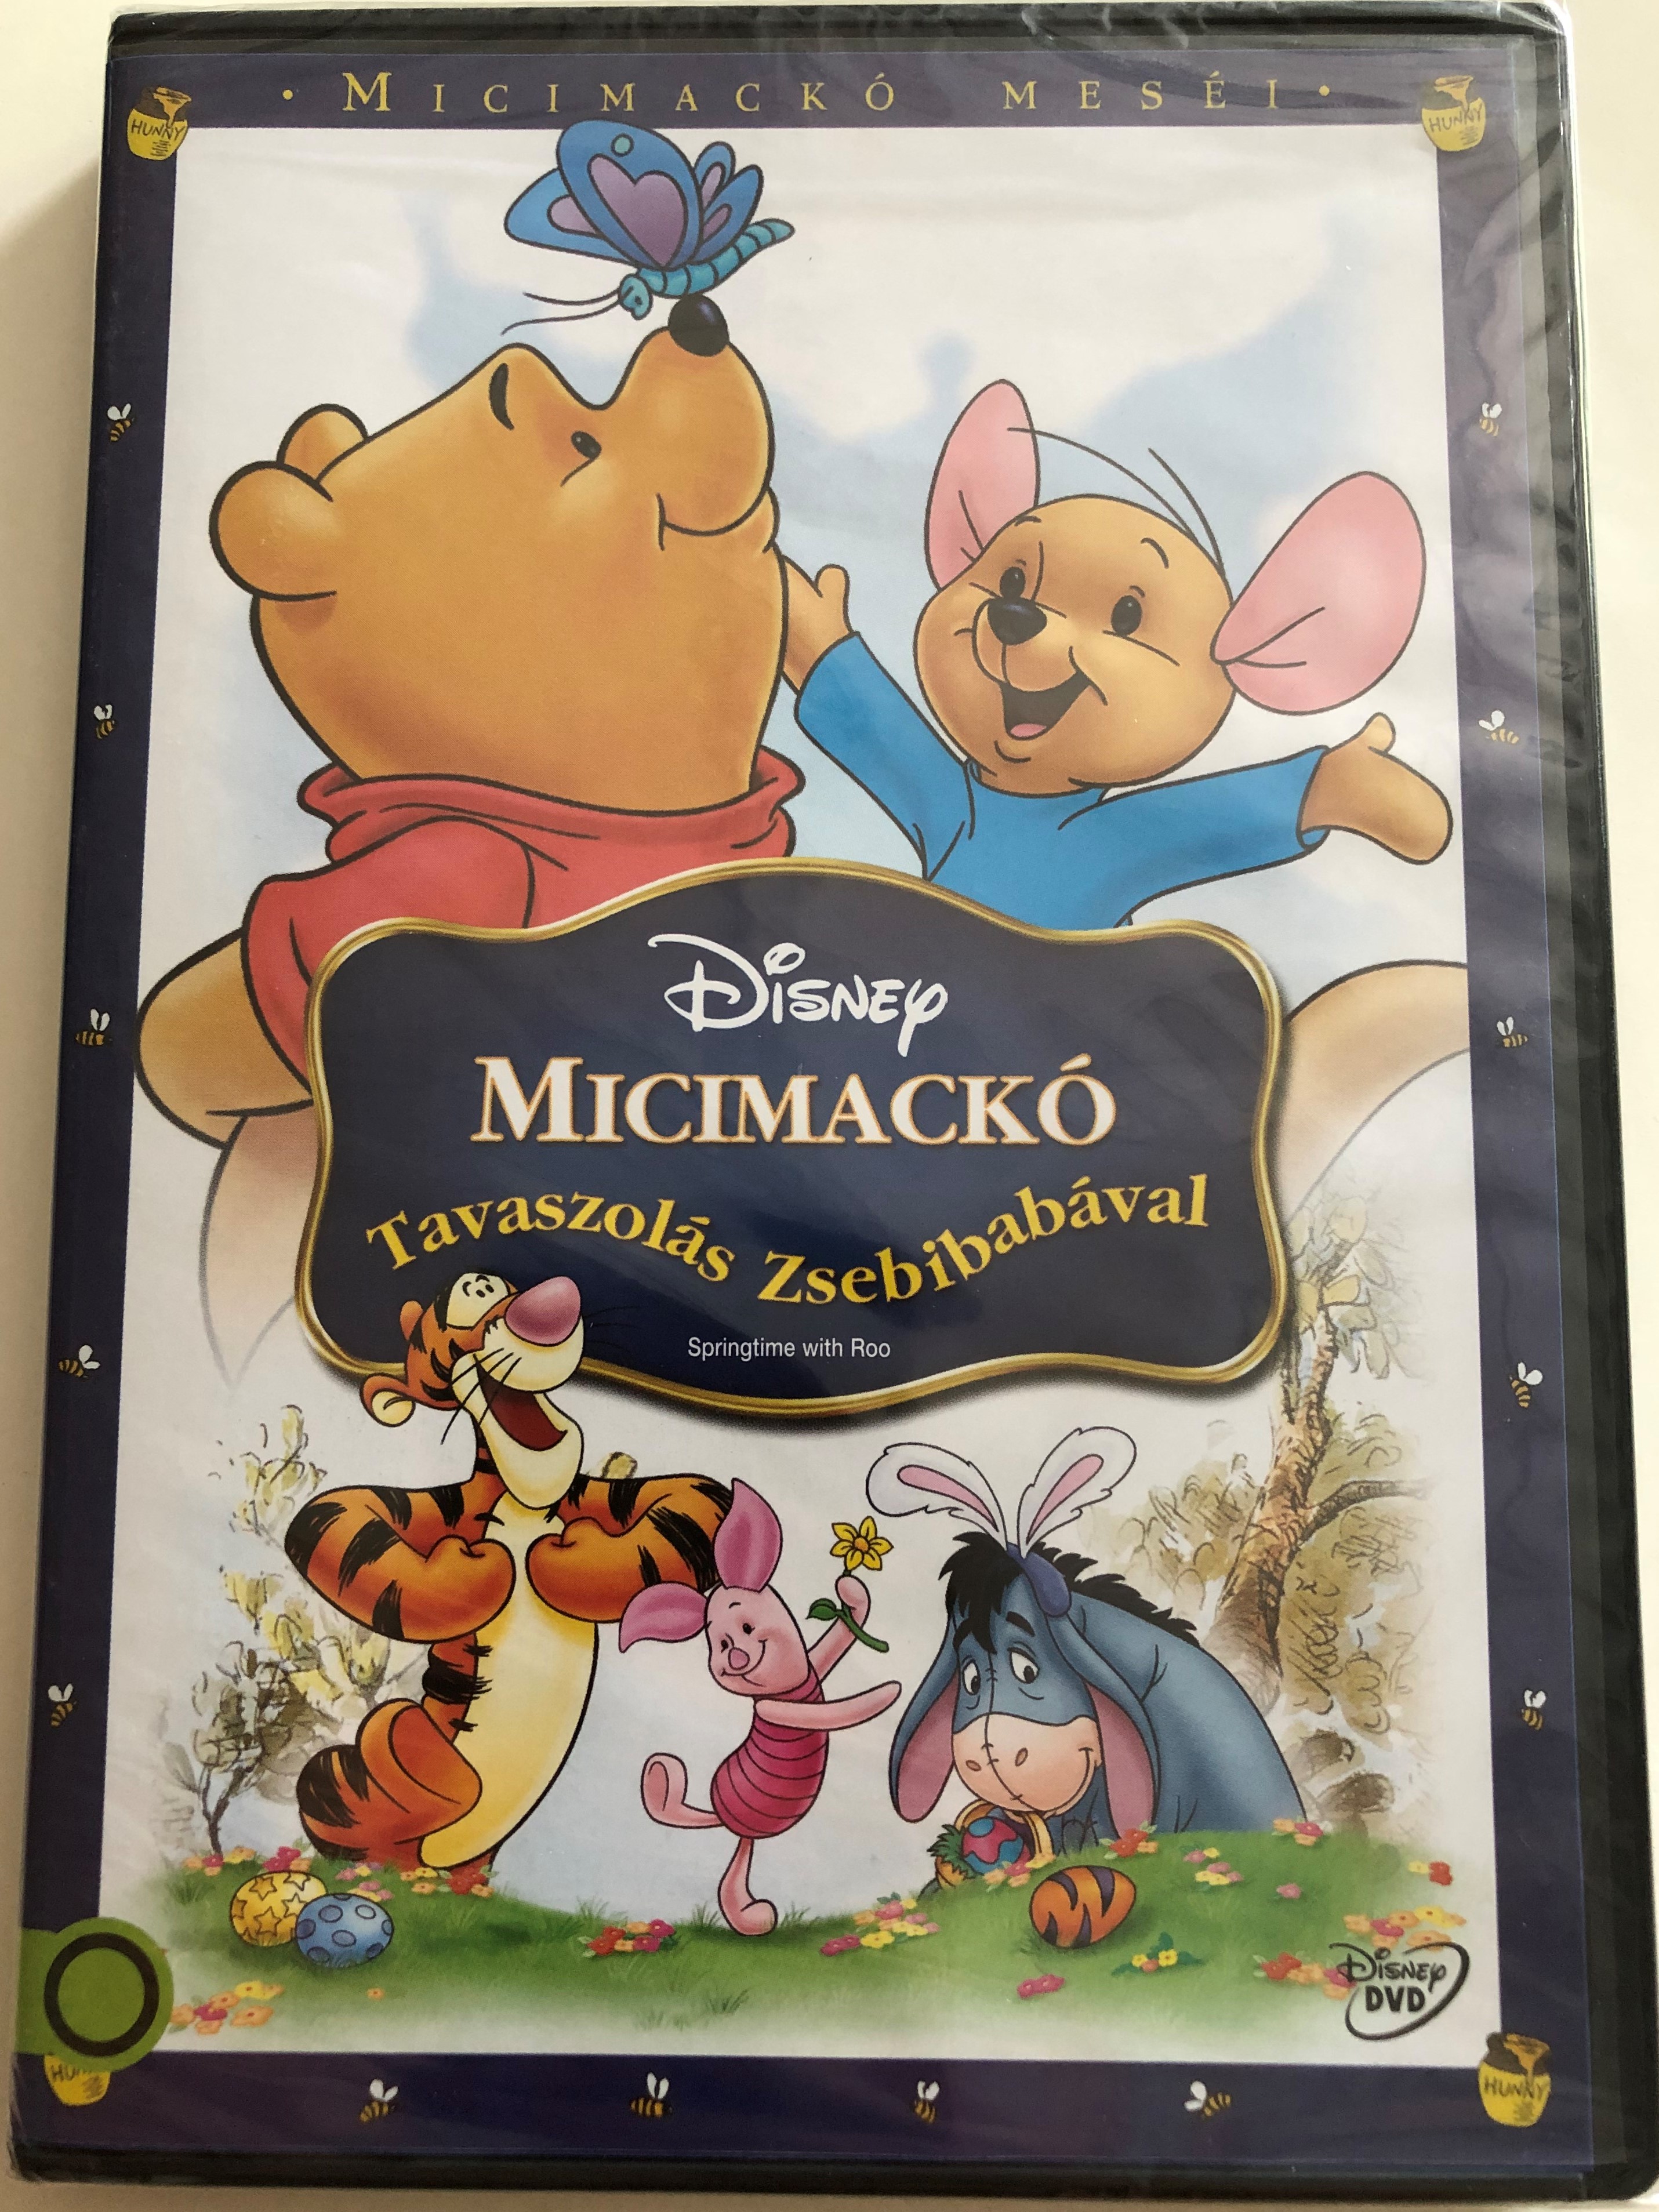 winnie-the-pooh-springtime-with-roo-dvd-2004-micimack-tavaszol-s-zsebibab-val-disney-animated-musical-comedy-1-.jpg